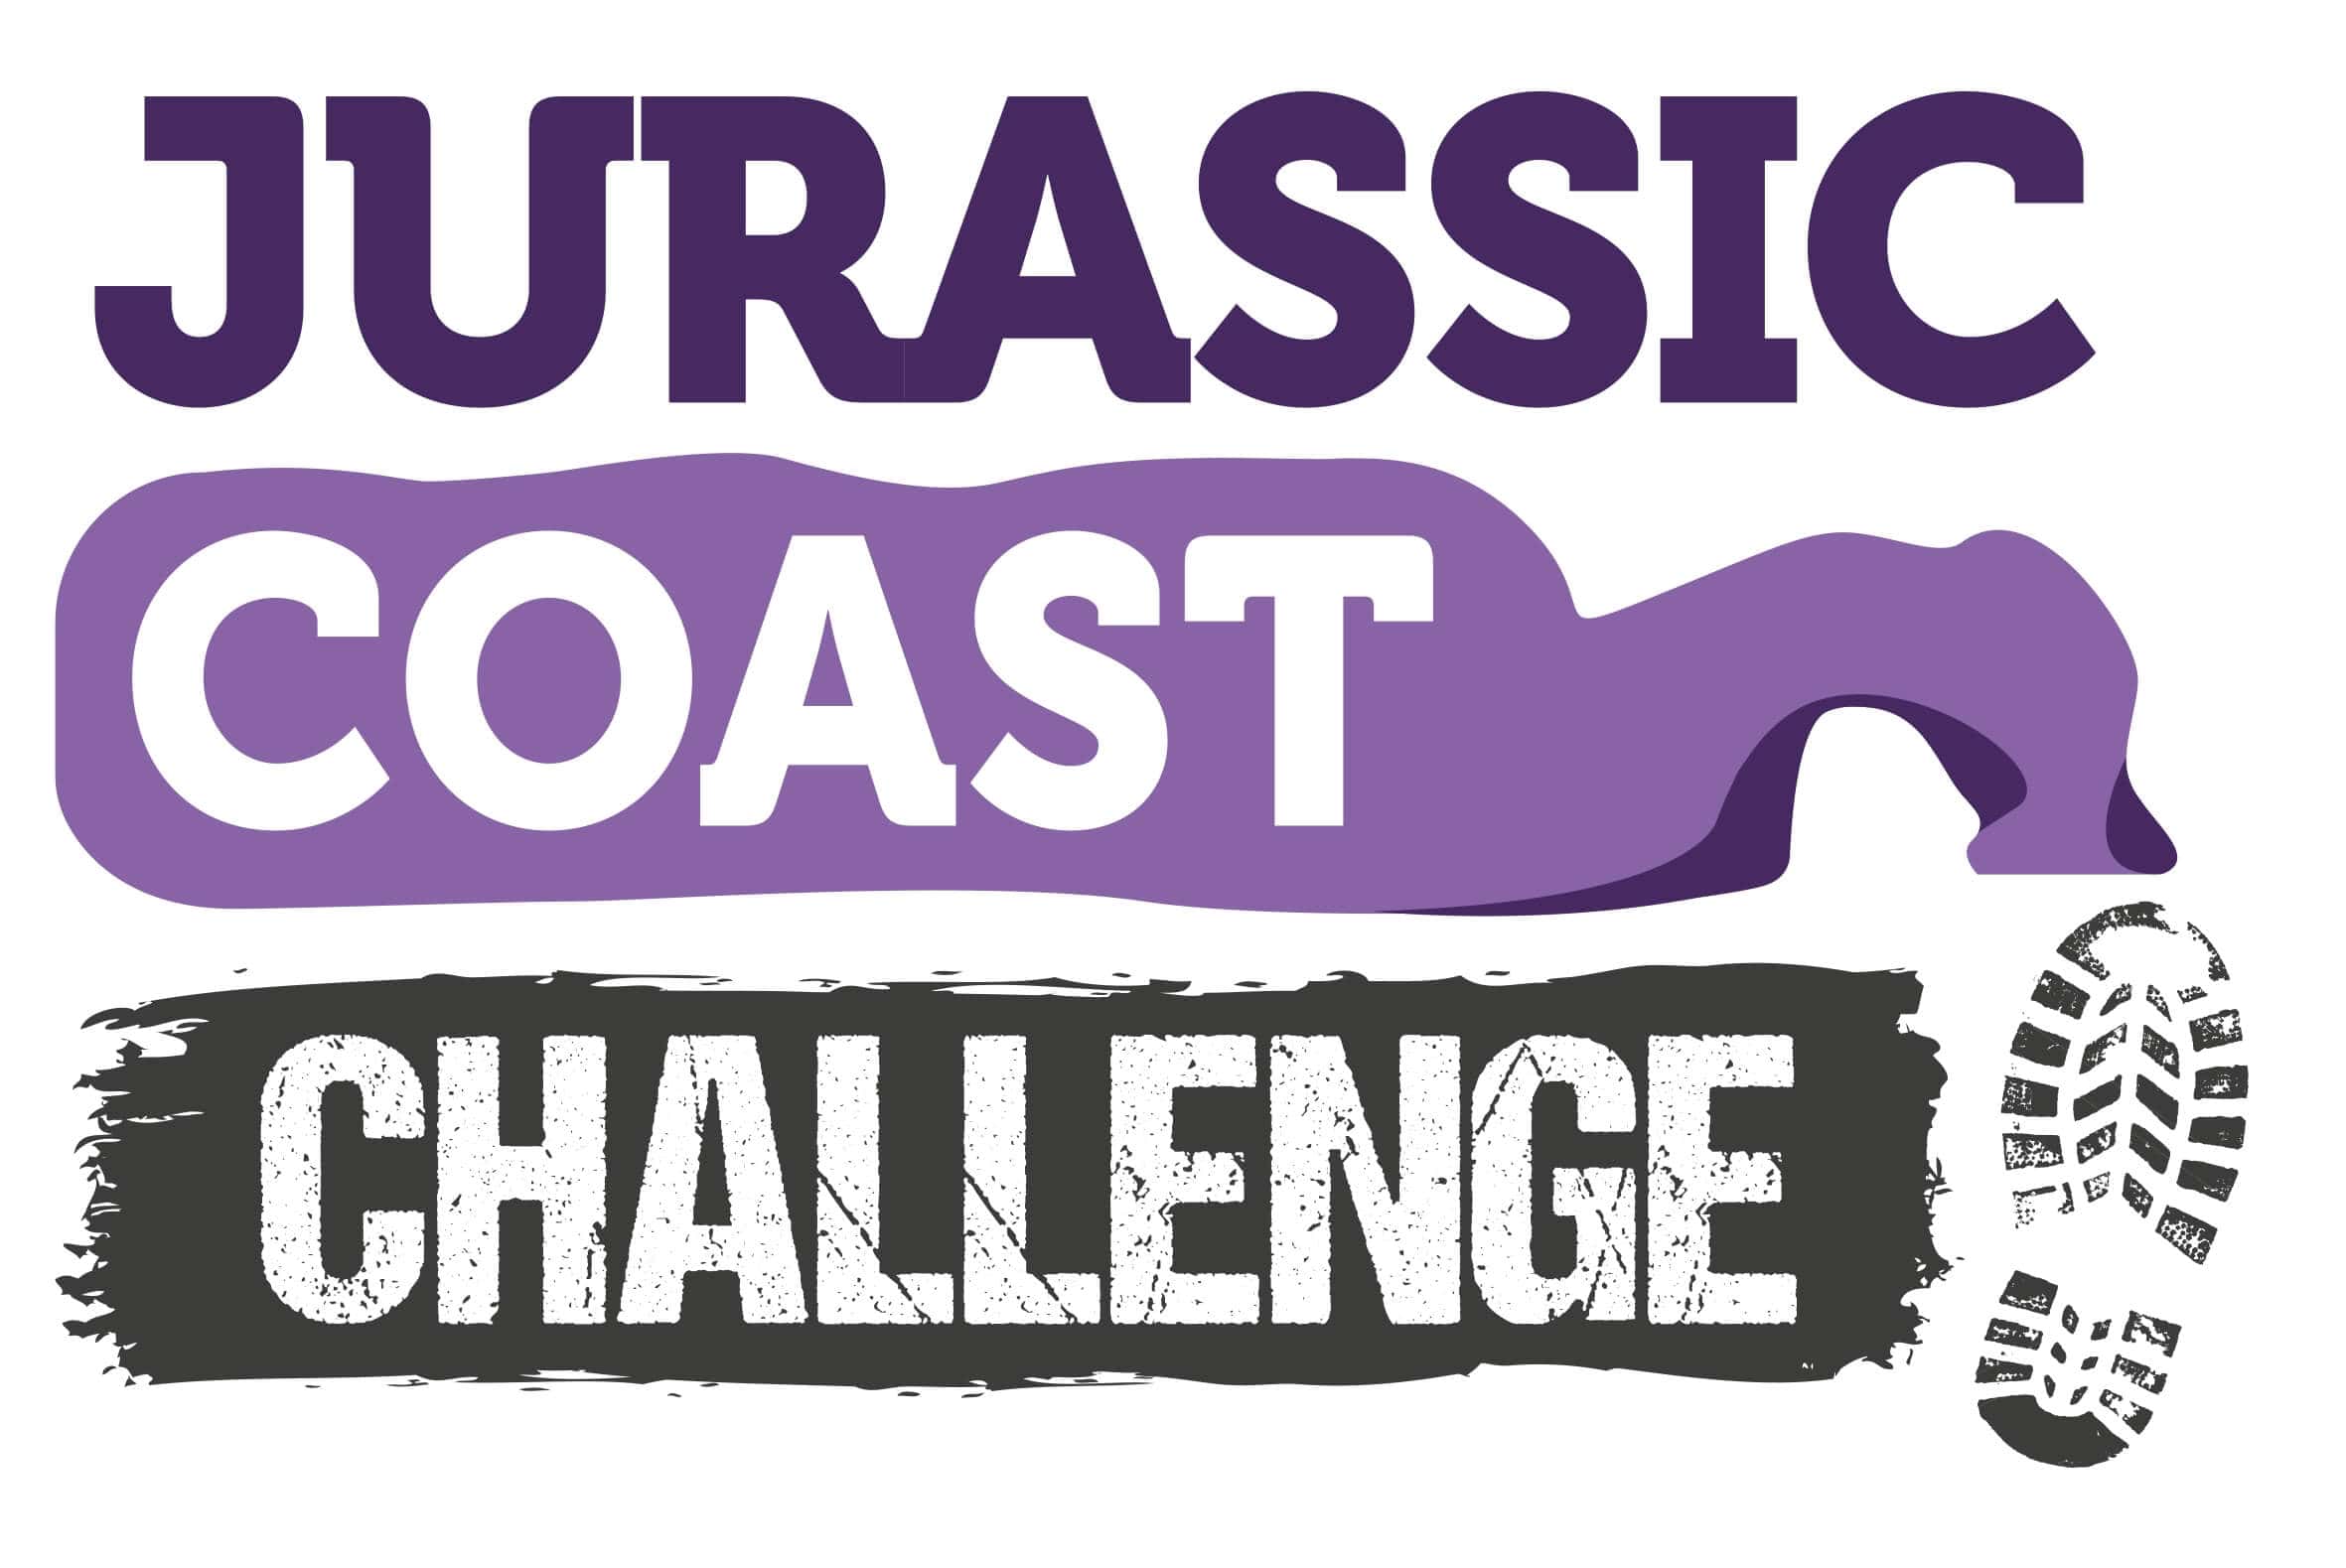 Jurassic coast logo